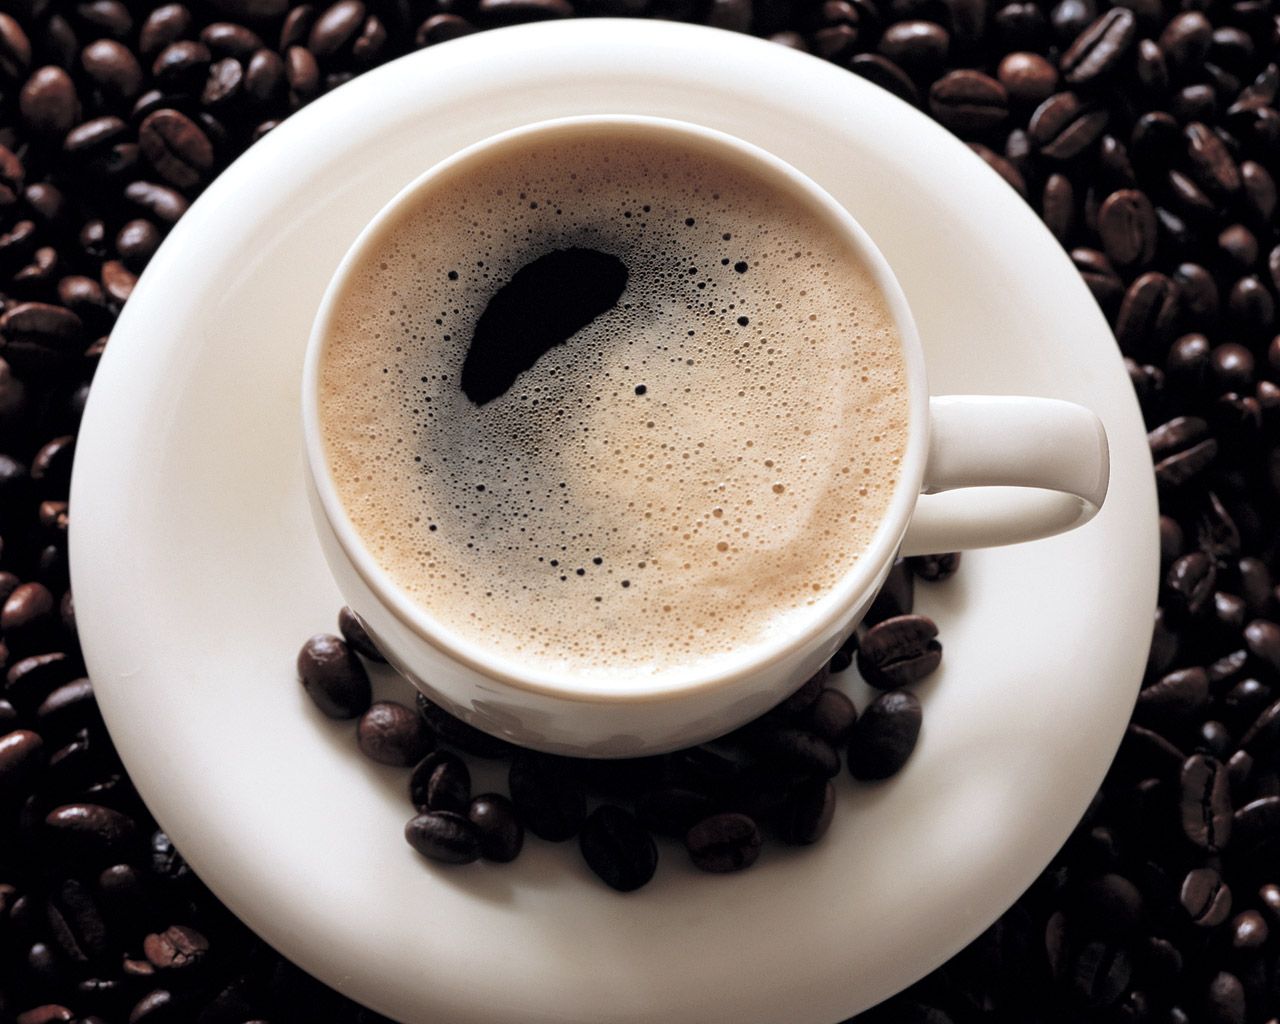 Download wallpaper: black Coffee, download photo, wallpaper